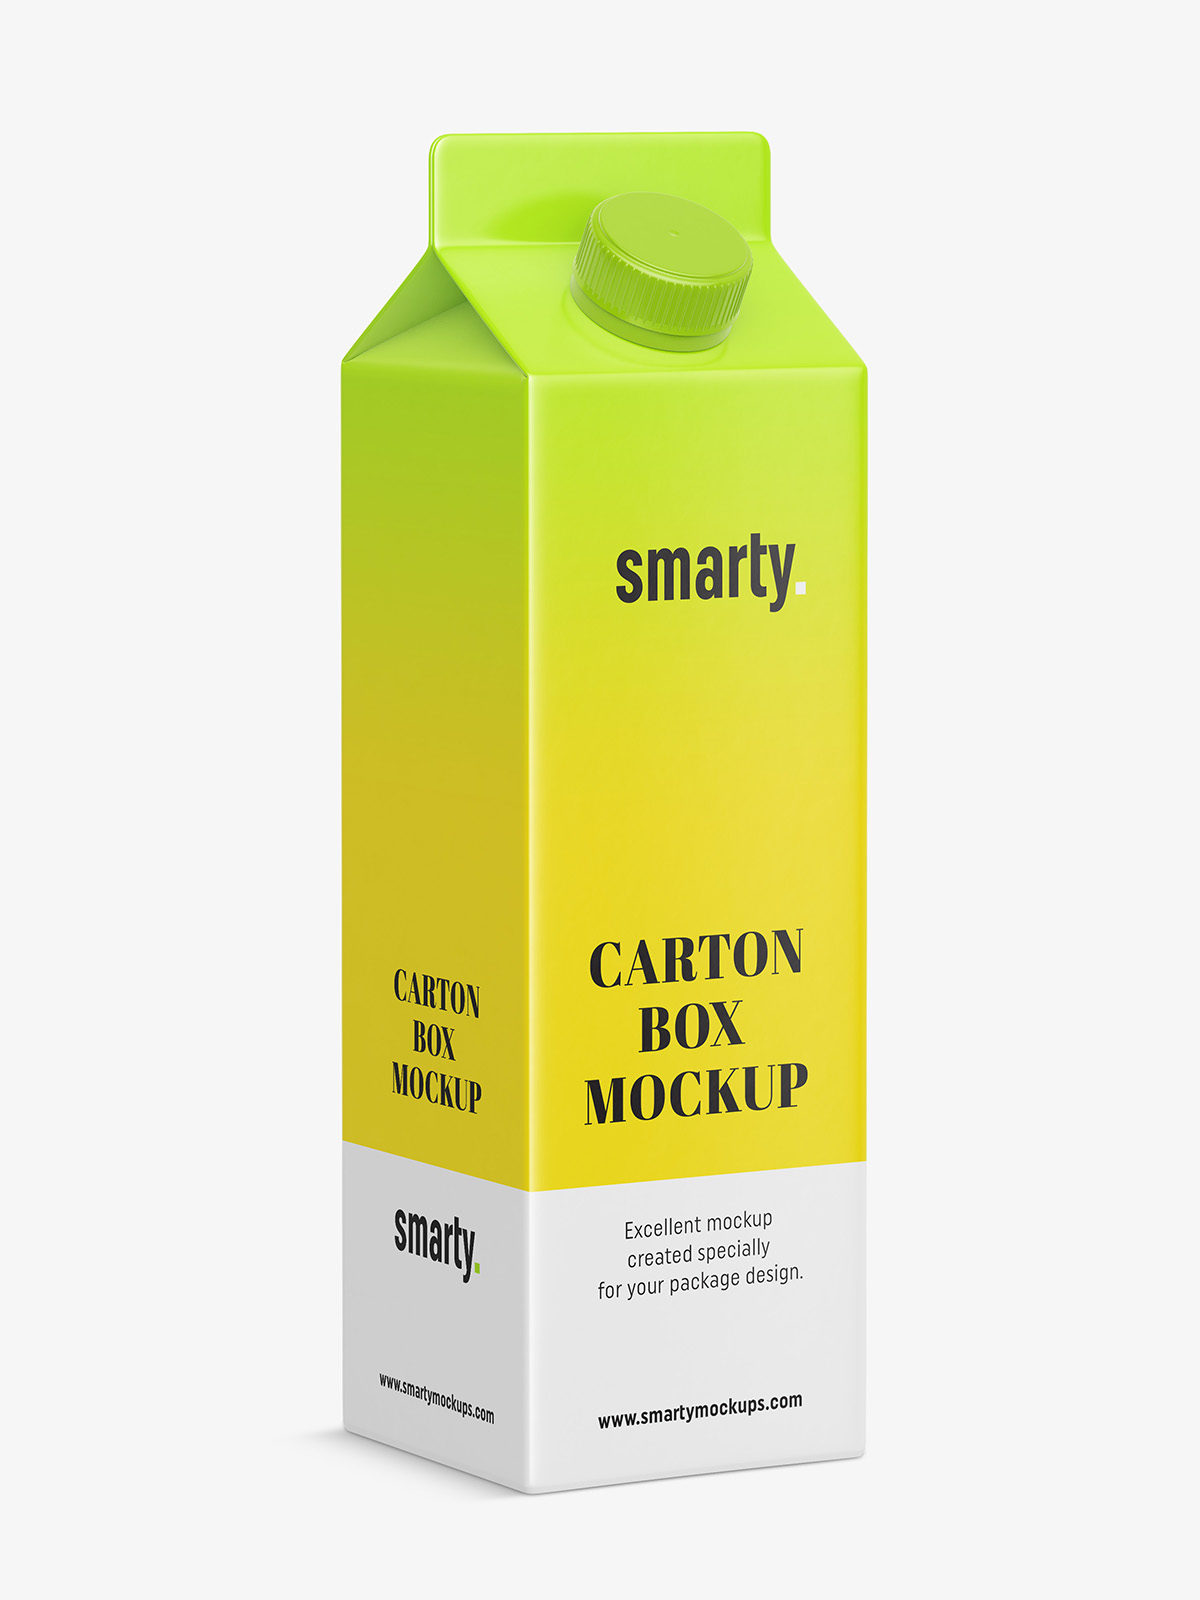 Download Juice box mockup - Smarty Mockups